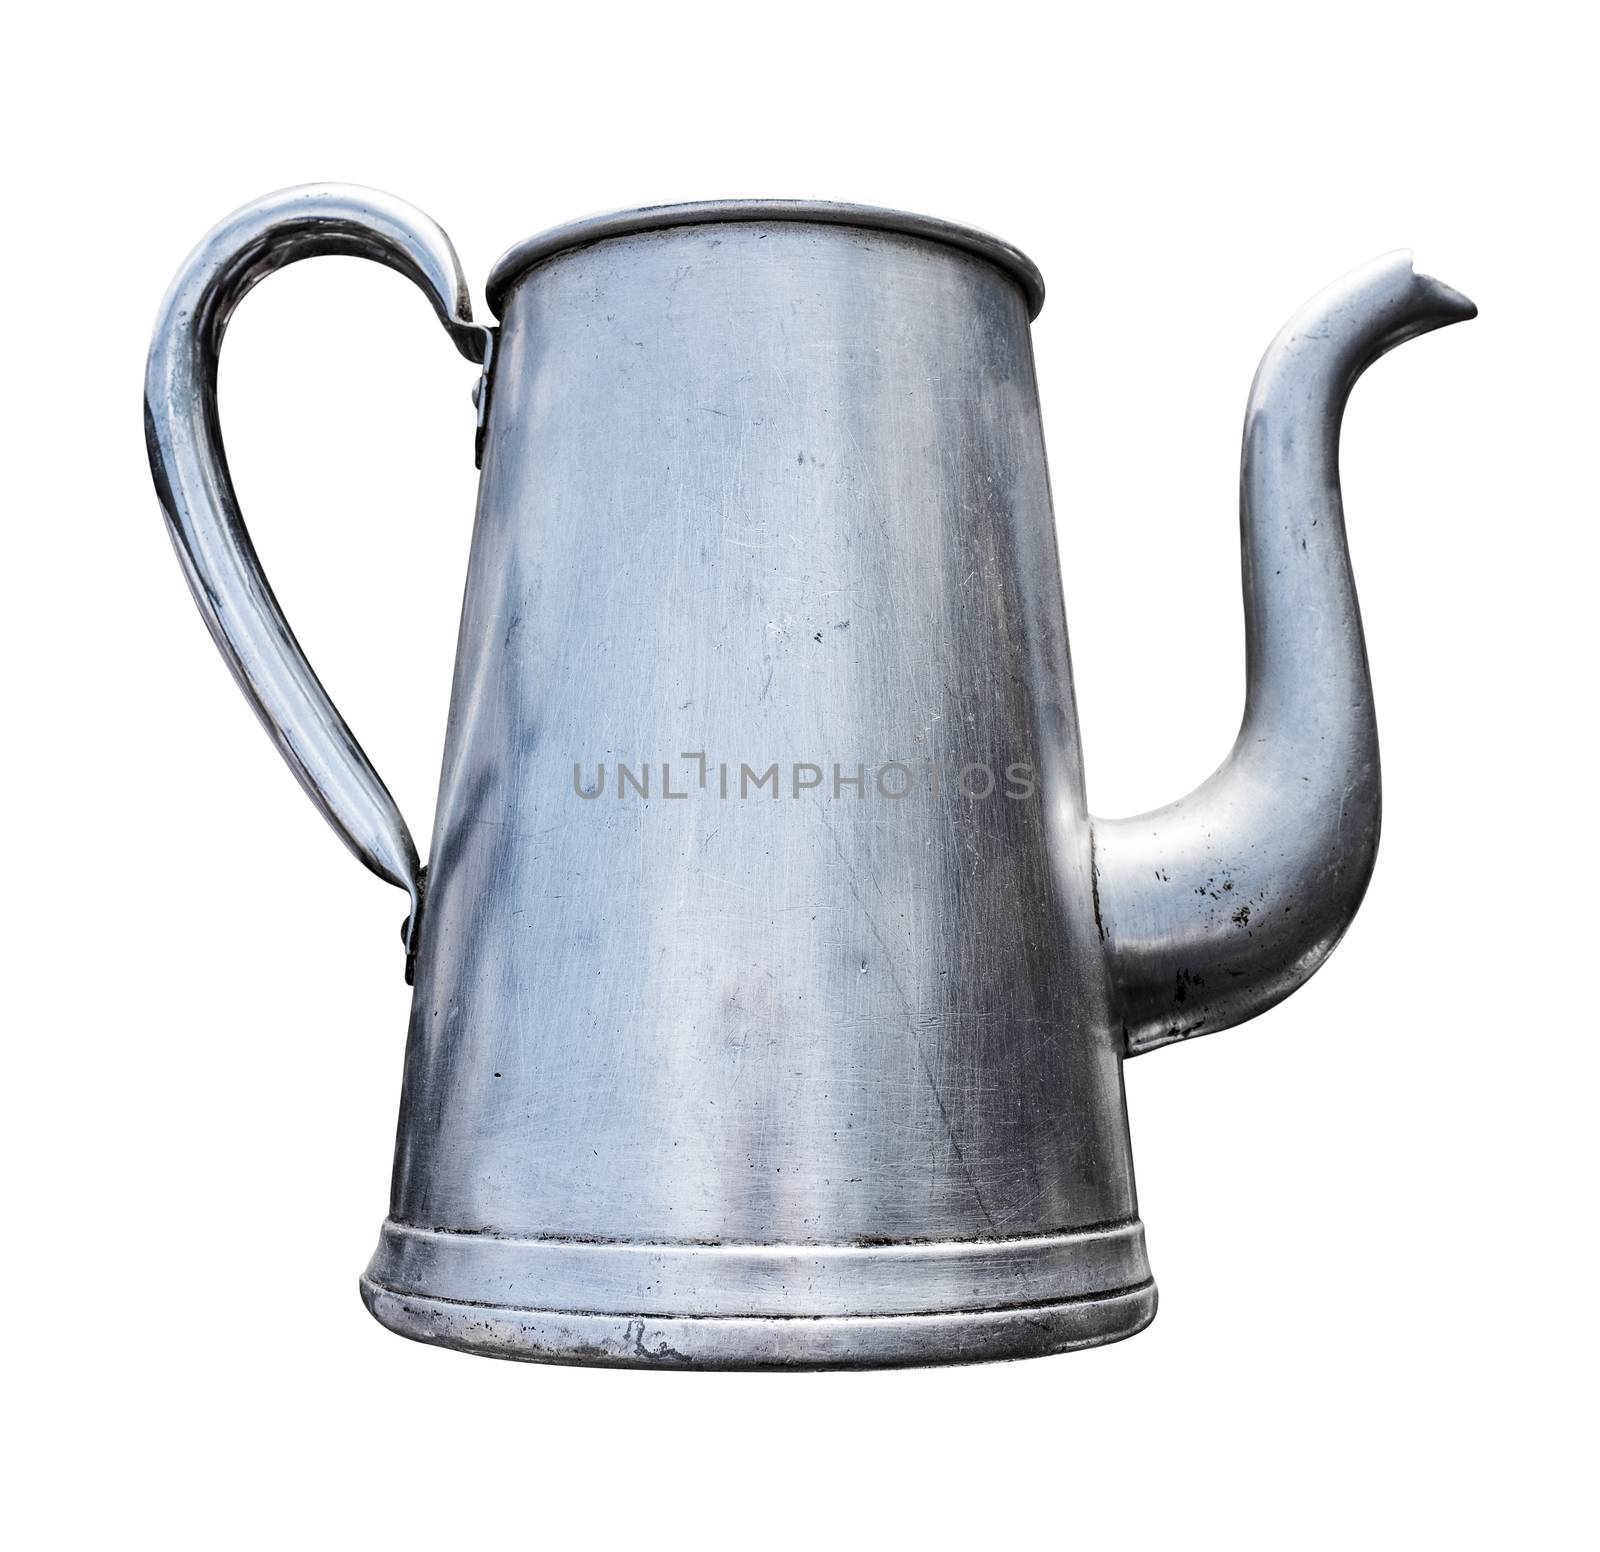 Antique Metal Teapot by mrdoomits